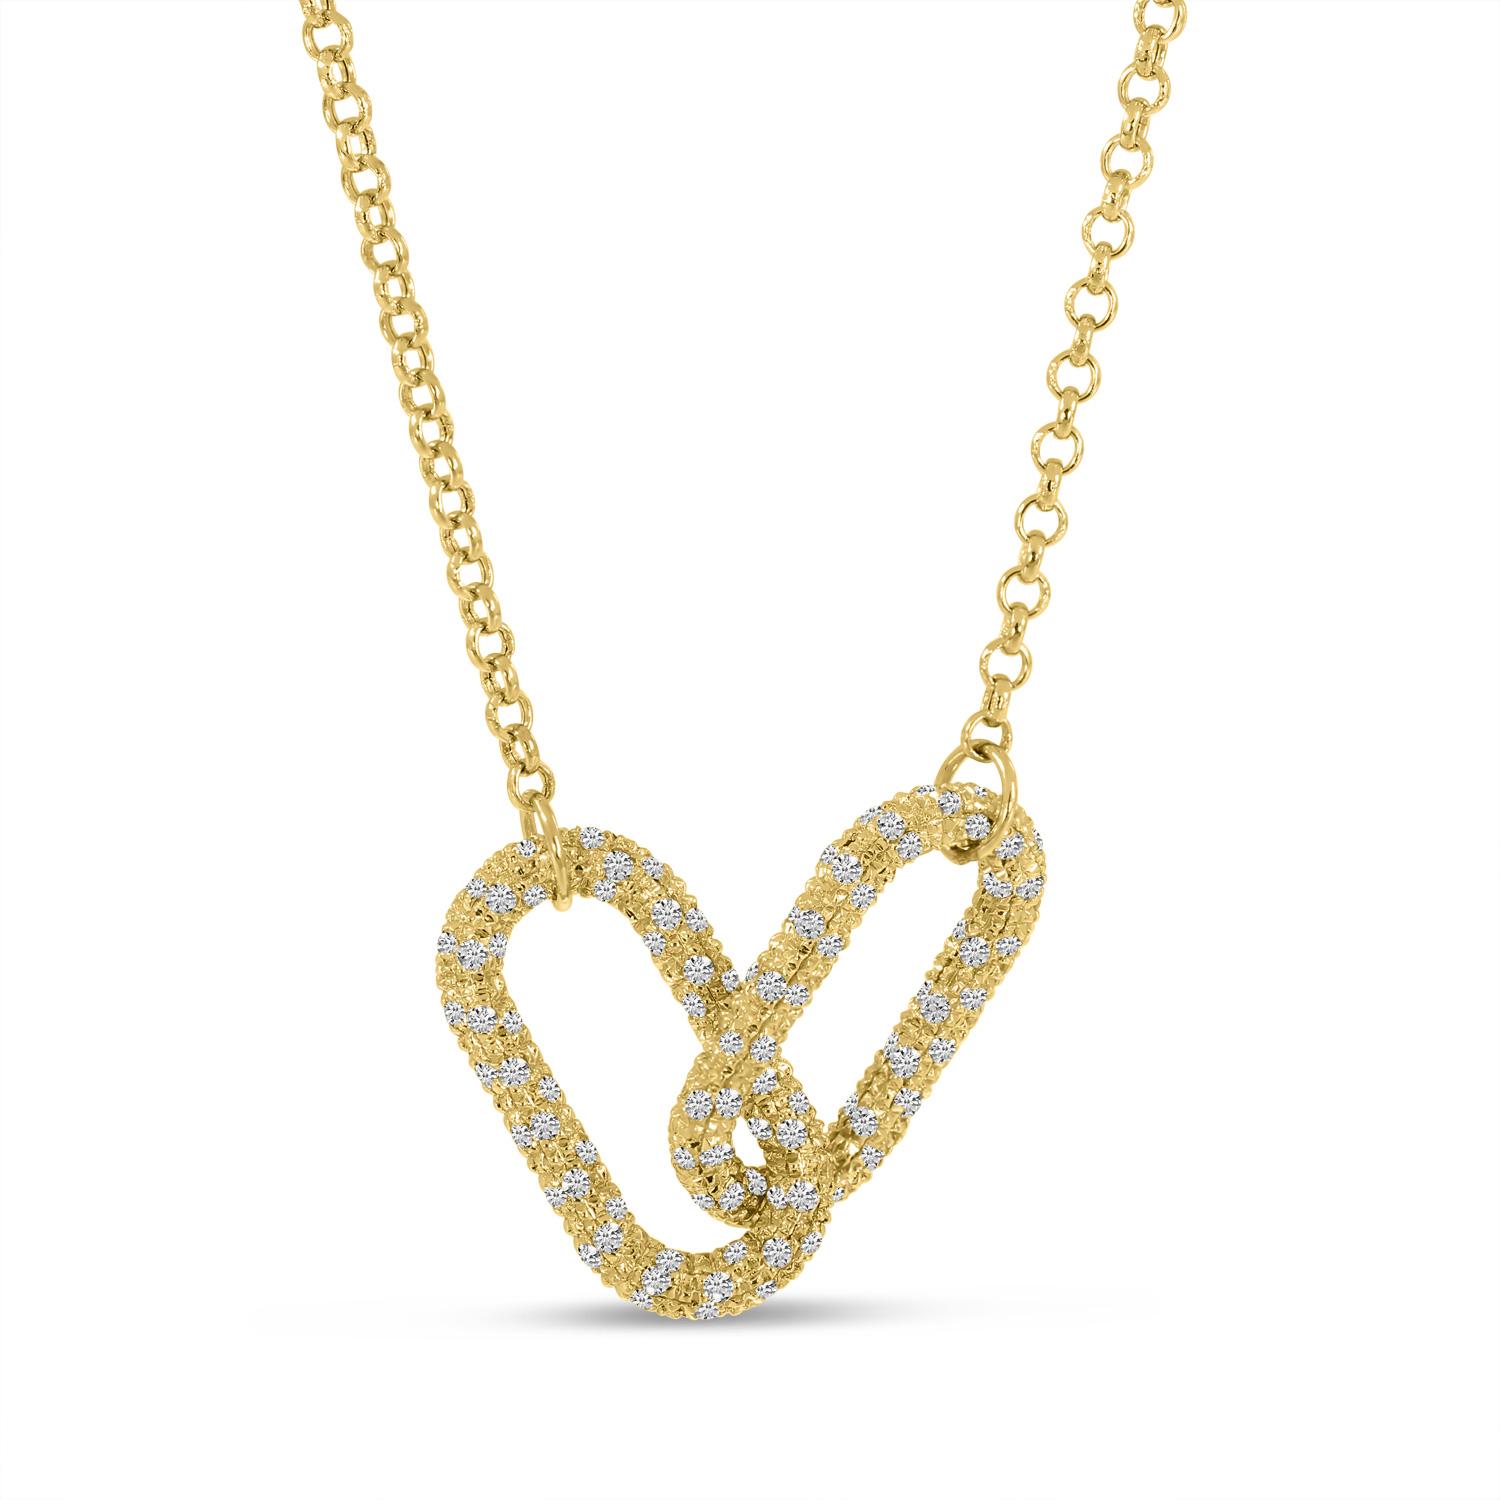 14K Yellow Gold Diamond Interlocking Links Necklace